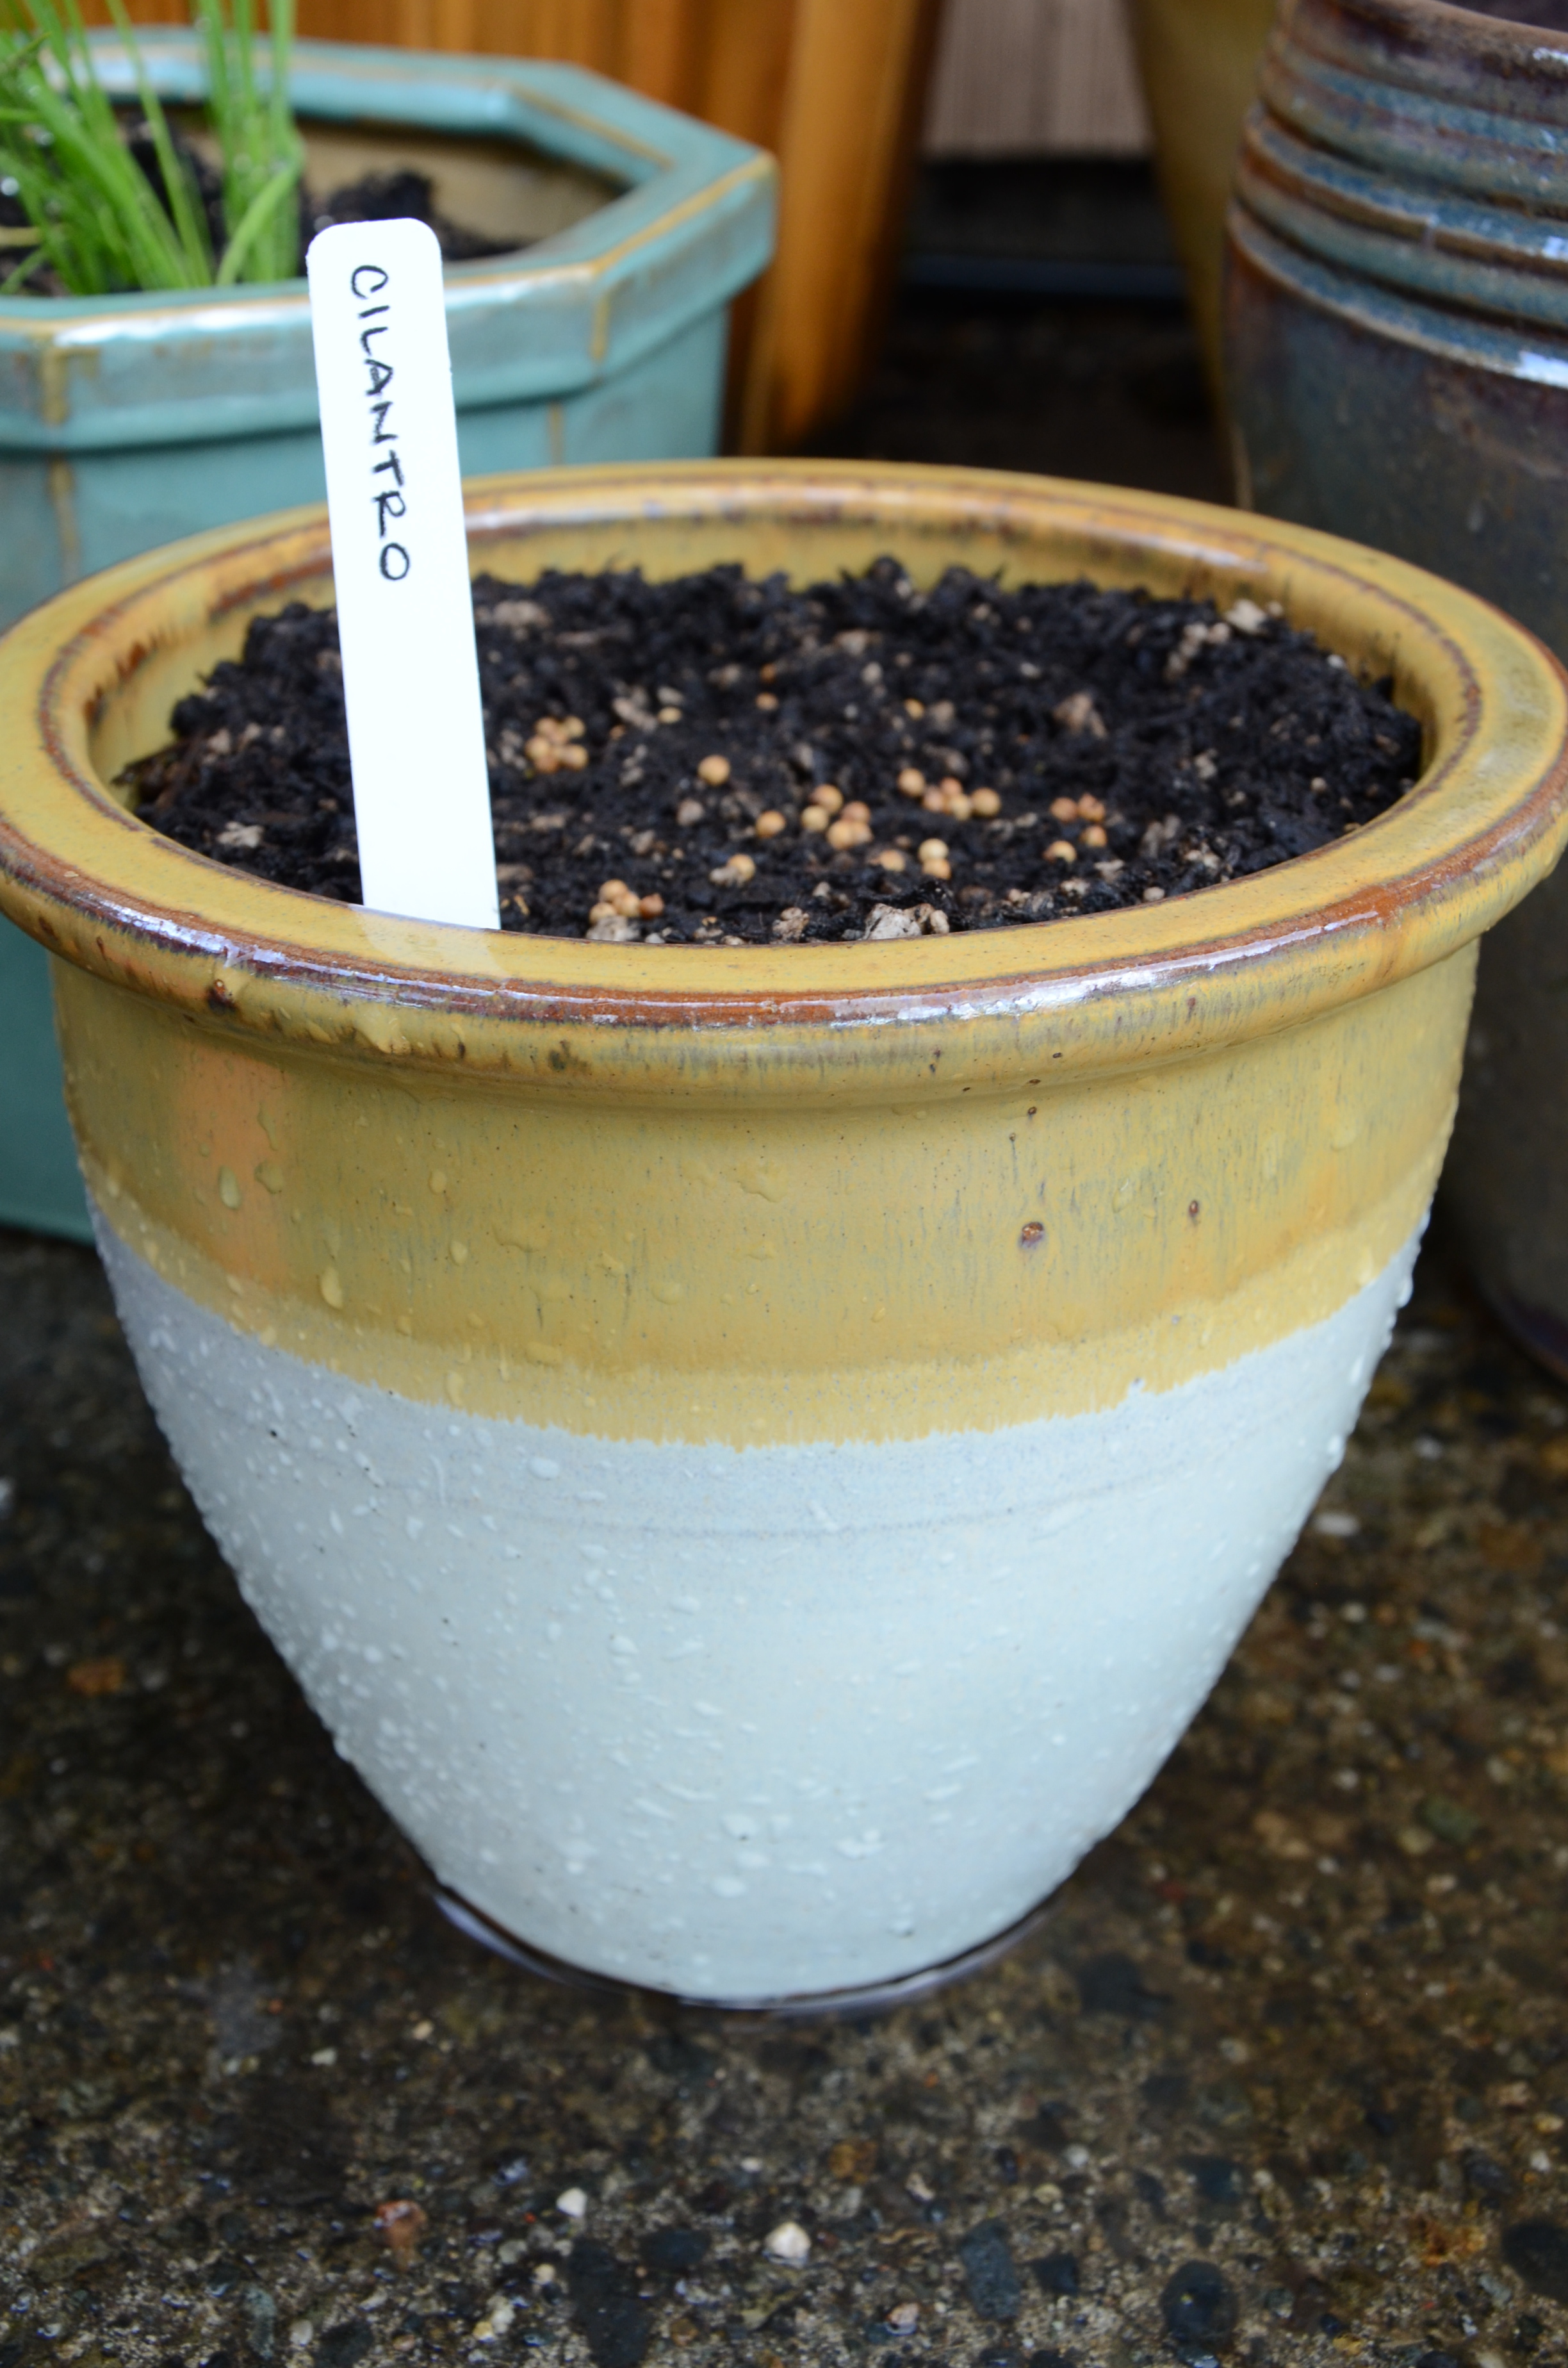 Seeding cilantro in a pot